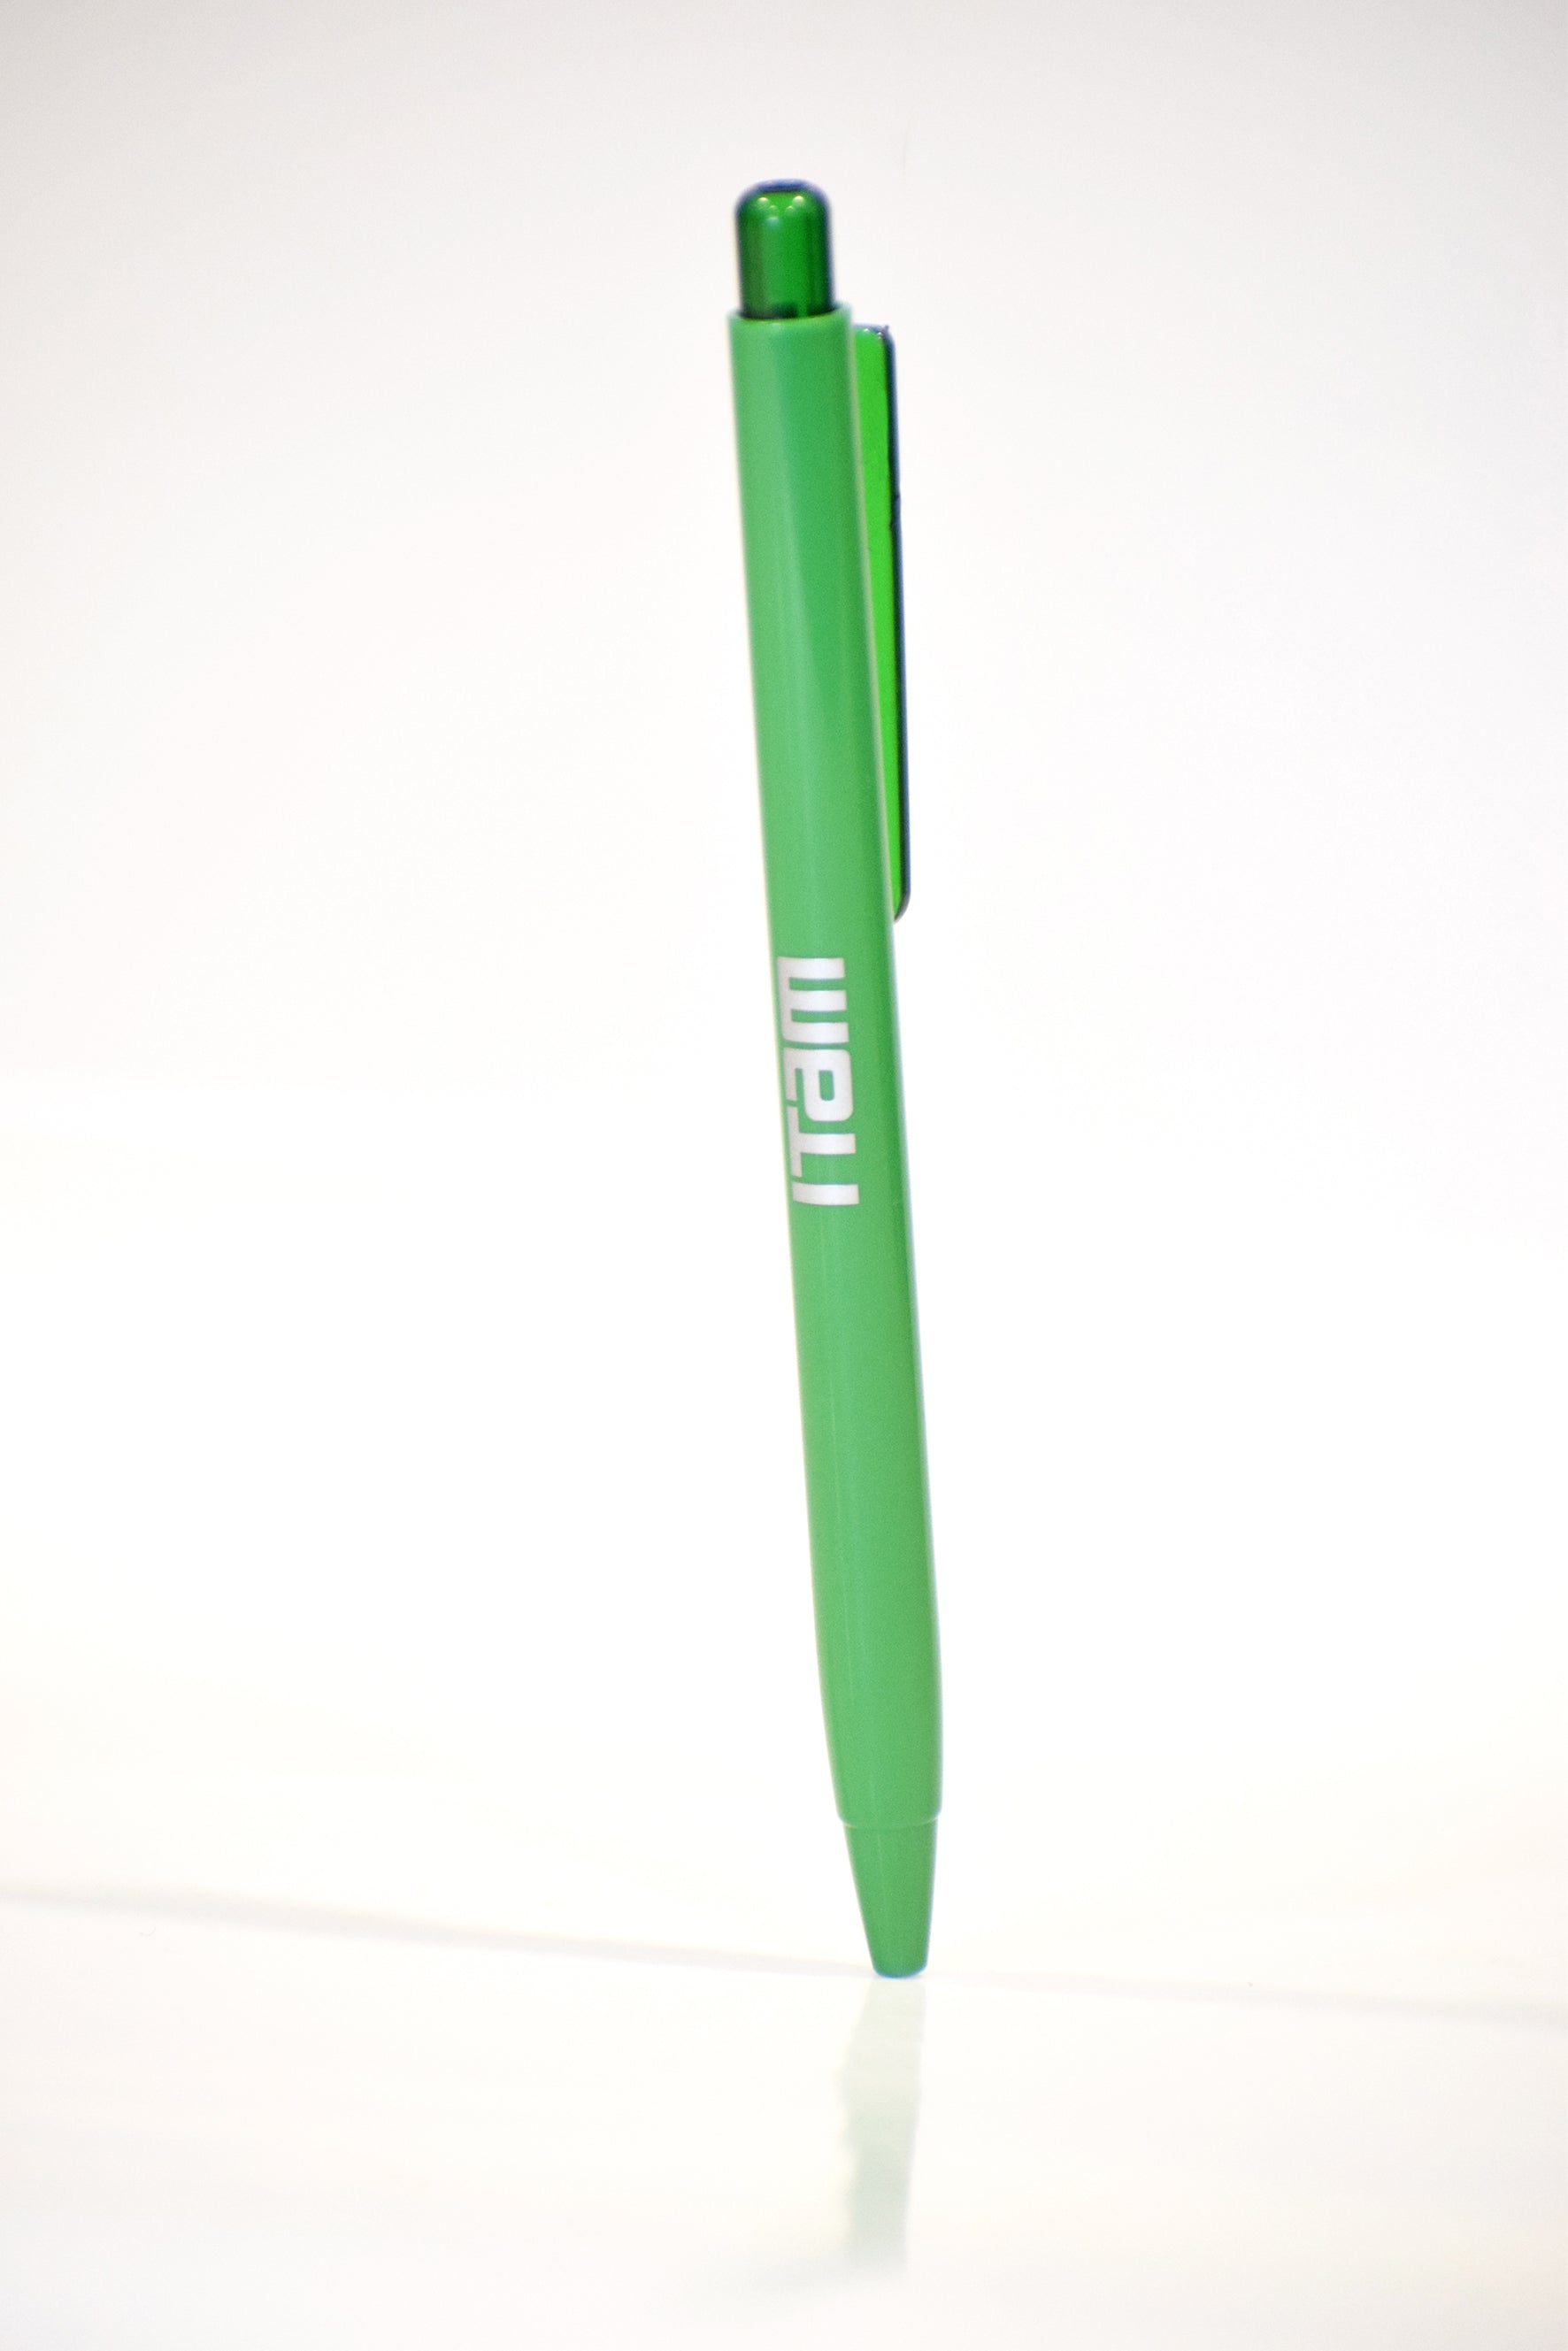 Bolígrafo en verde obscuro con logo ITAM